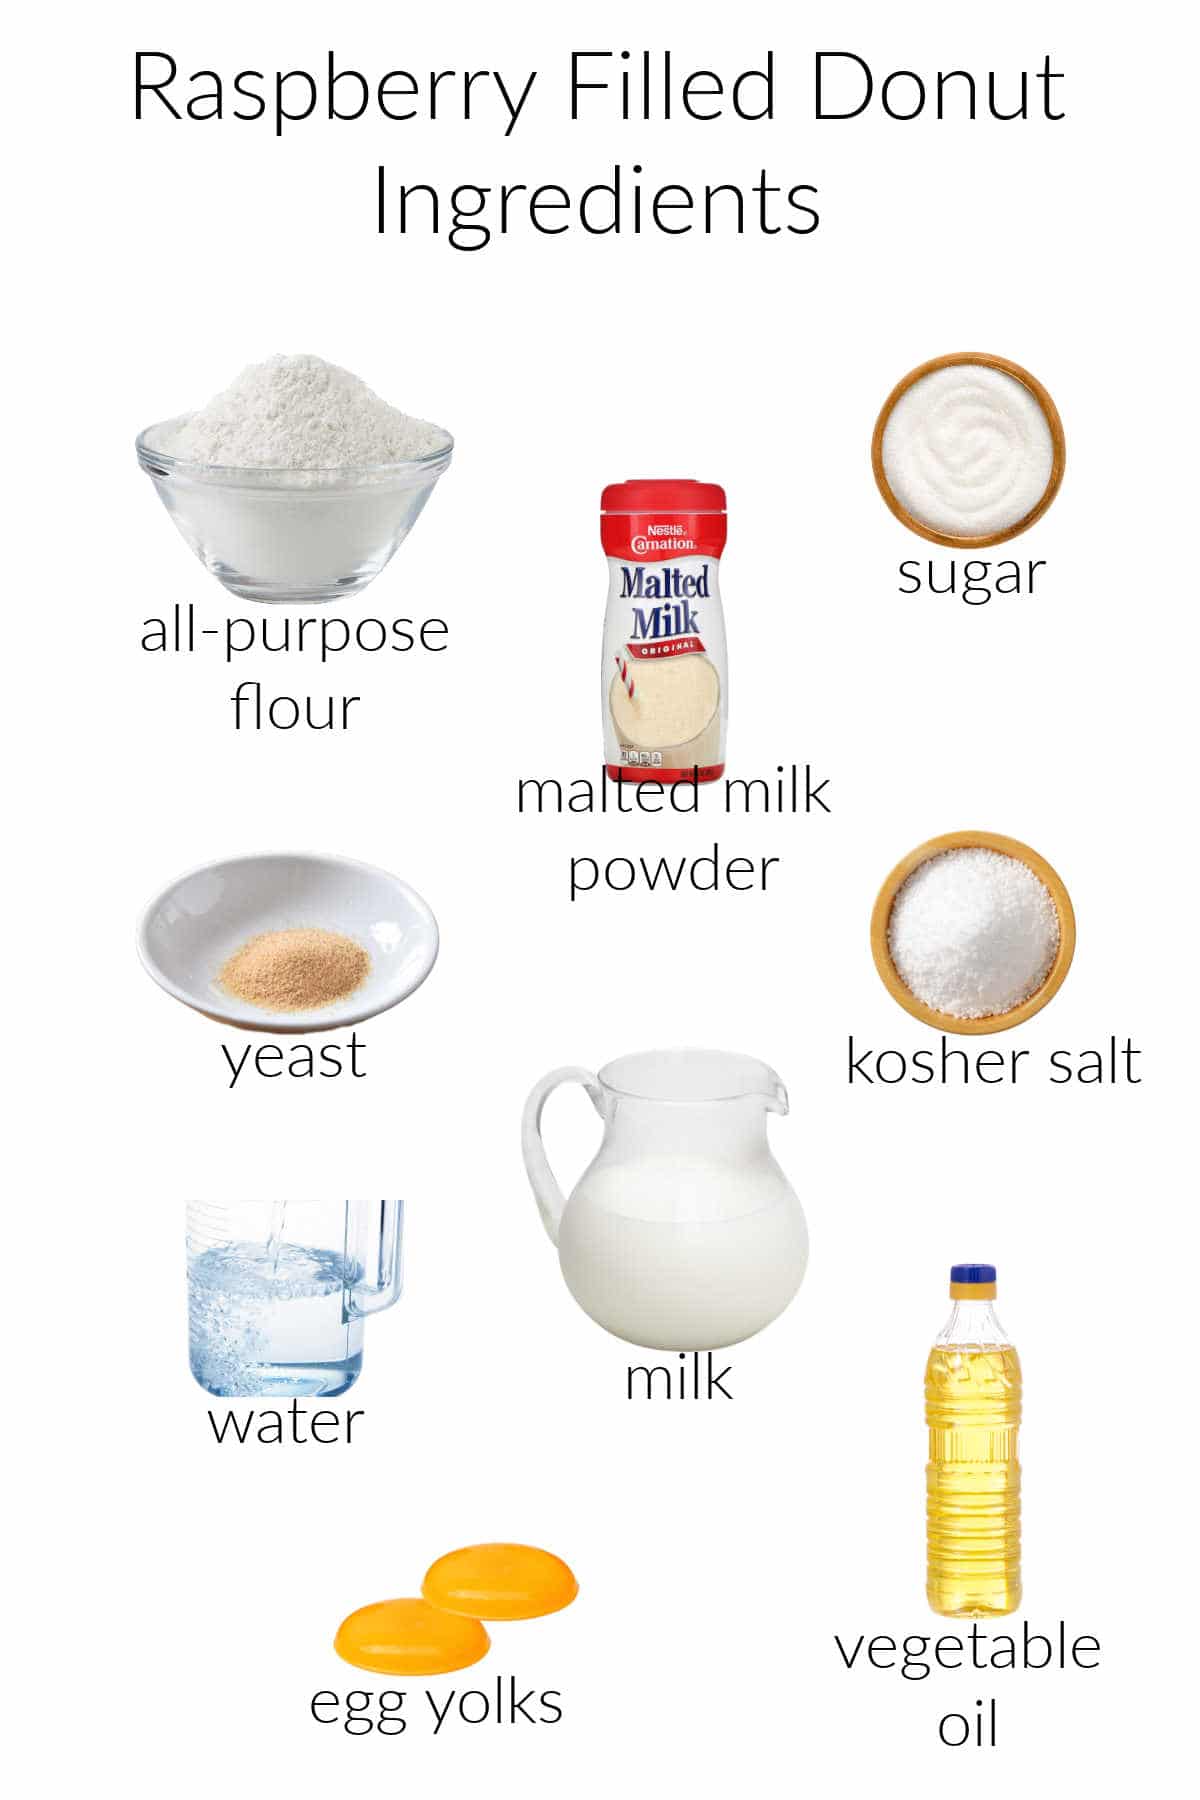 A collage of ingredients for making donut dough: flour, sugar, malted milk powder, yeast, salt, water, milk, egg yolks, and oil.